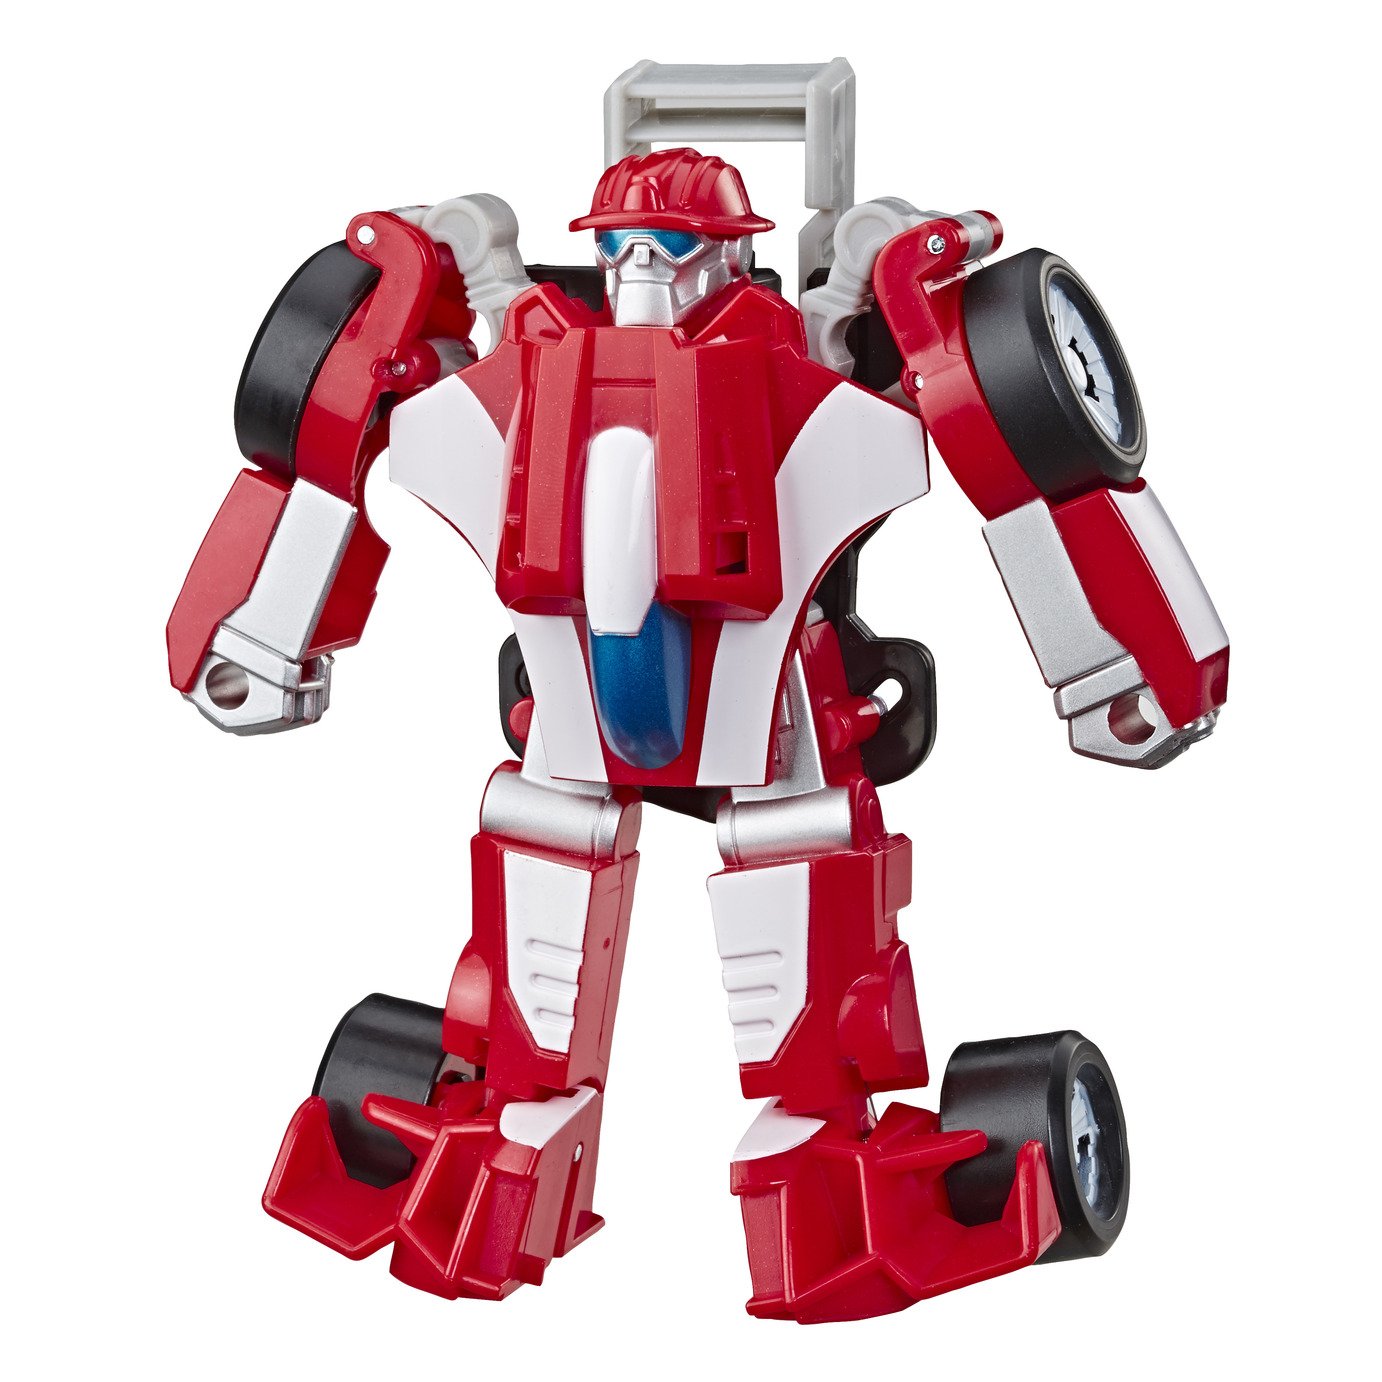 transformers rescue bots toys playskool heroes